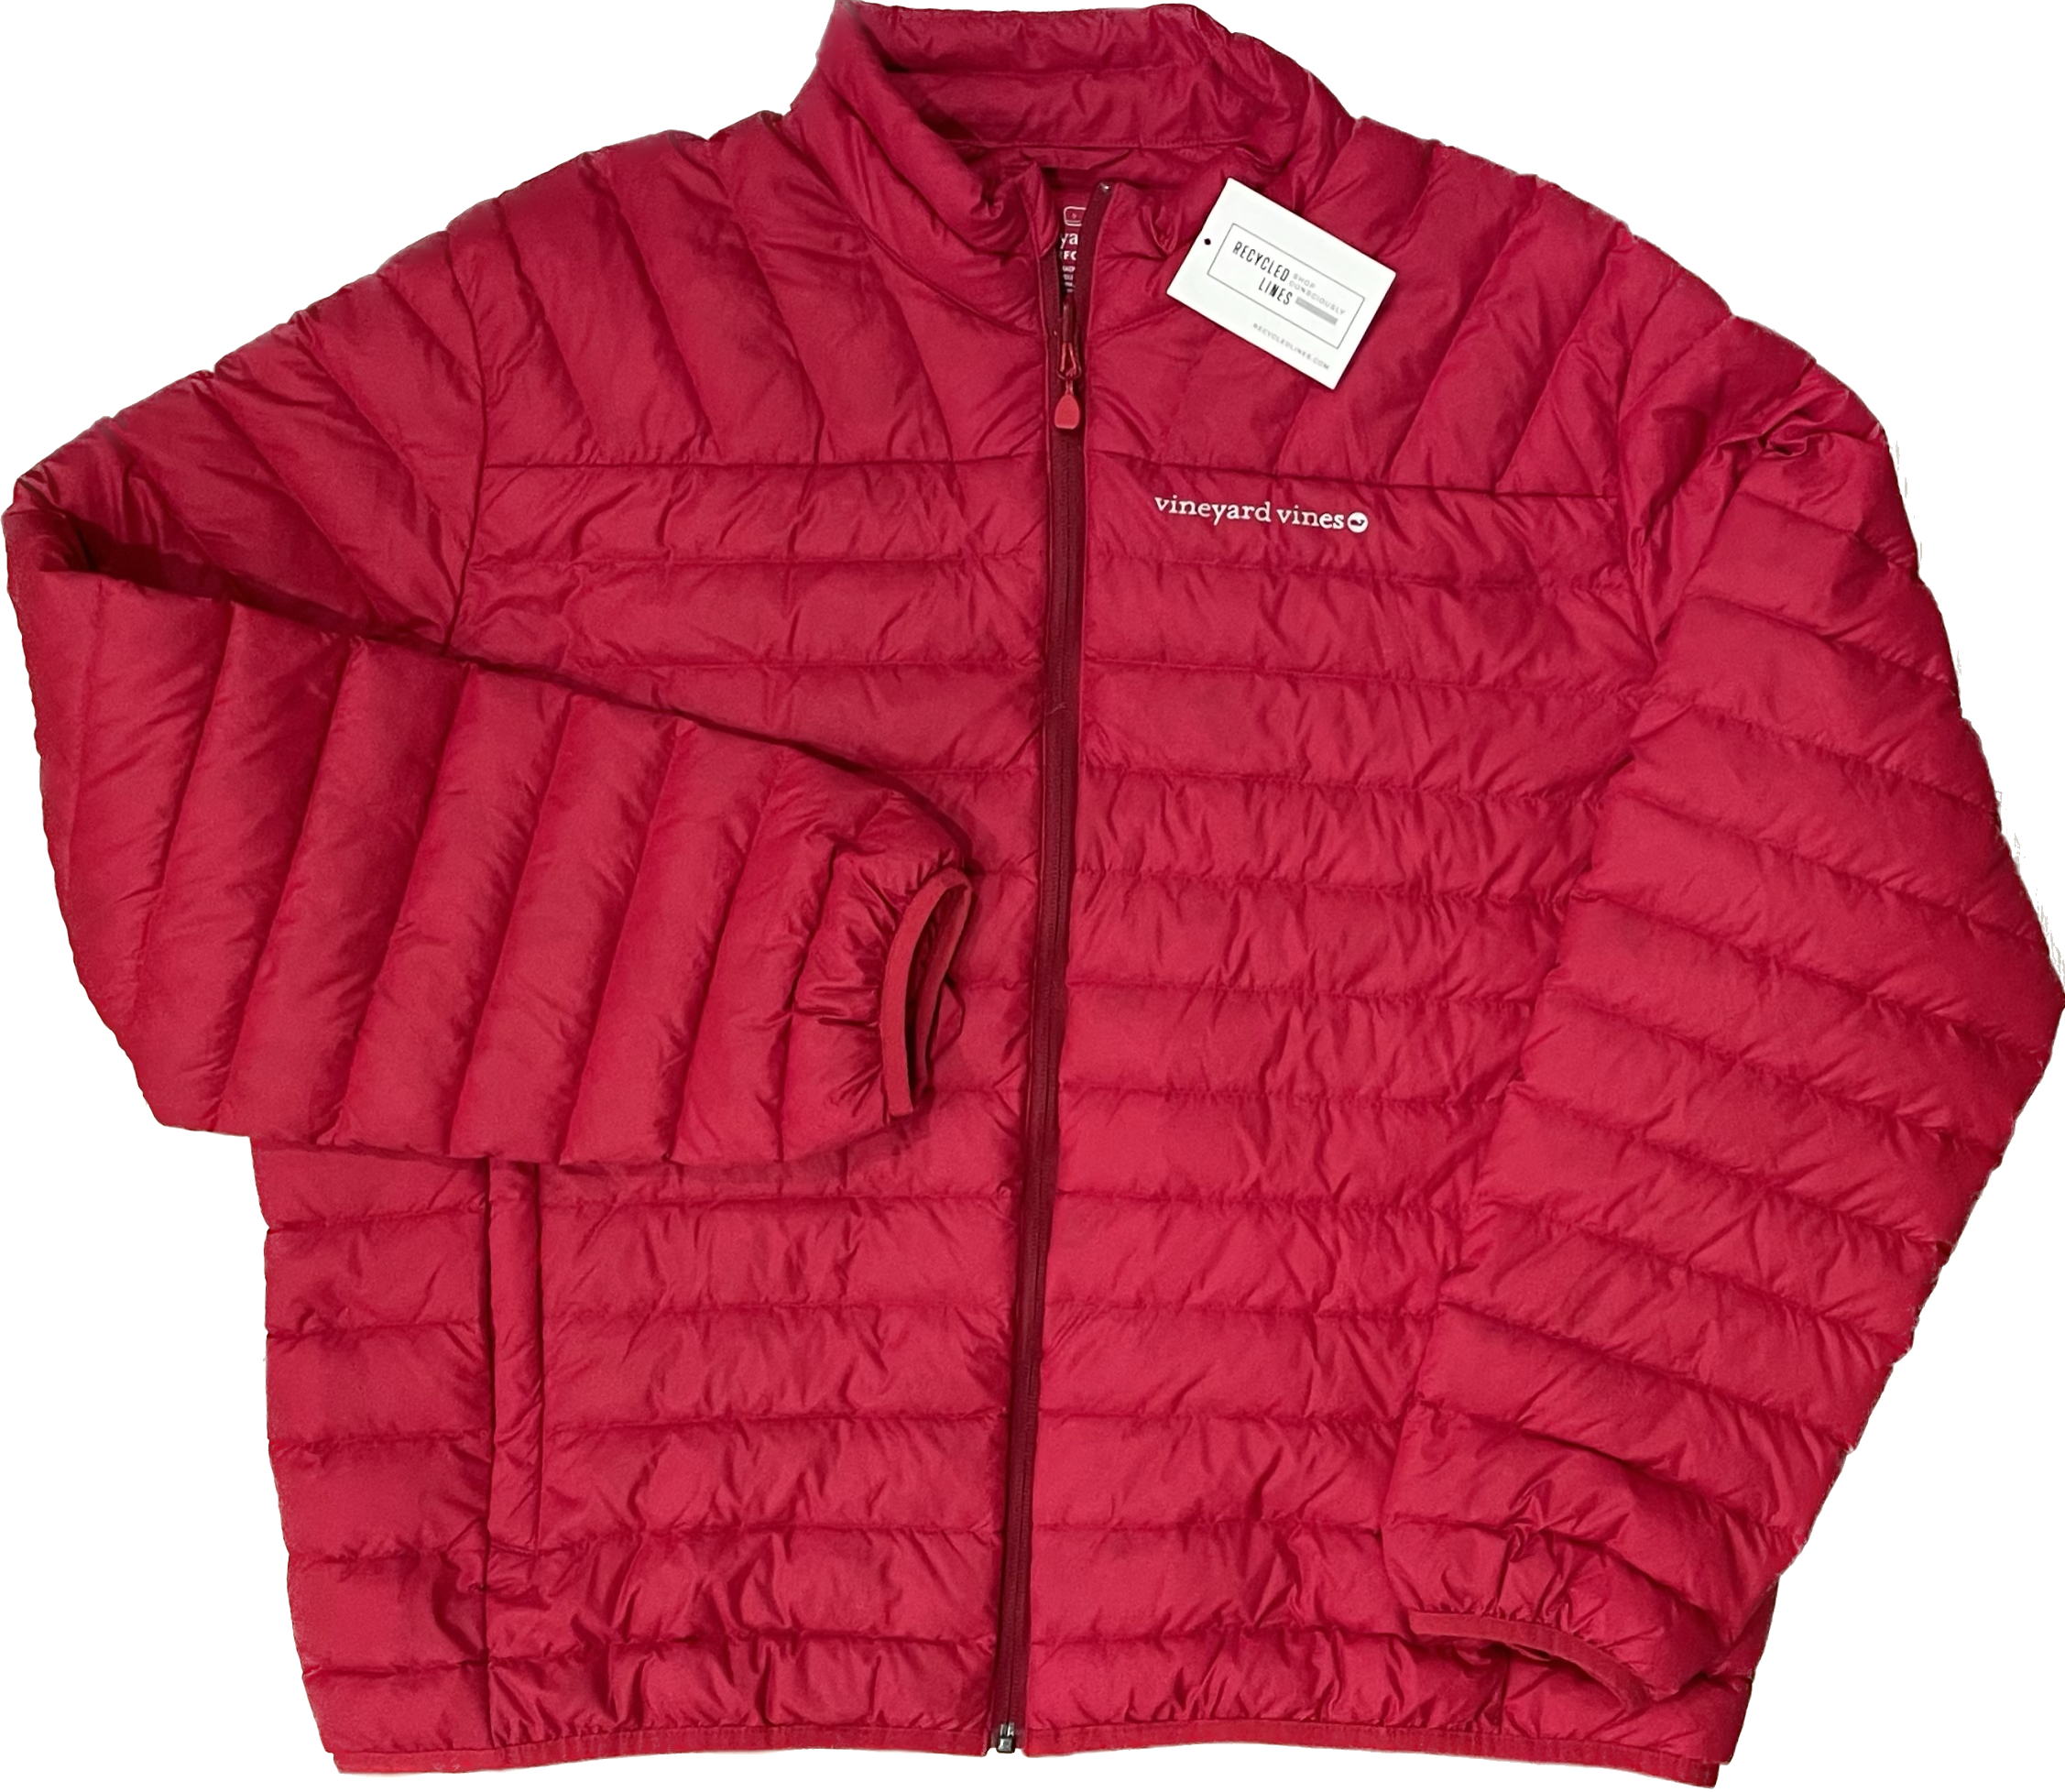 Vineyard Vines Performance Puffer Jacket, Red Mens Size XL